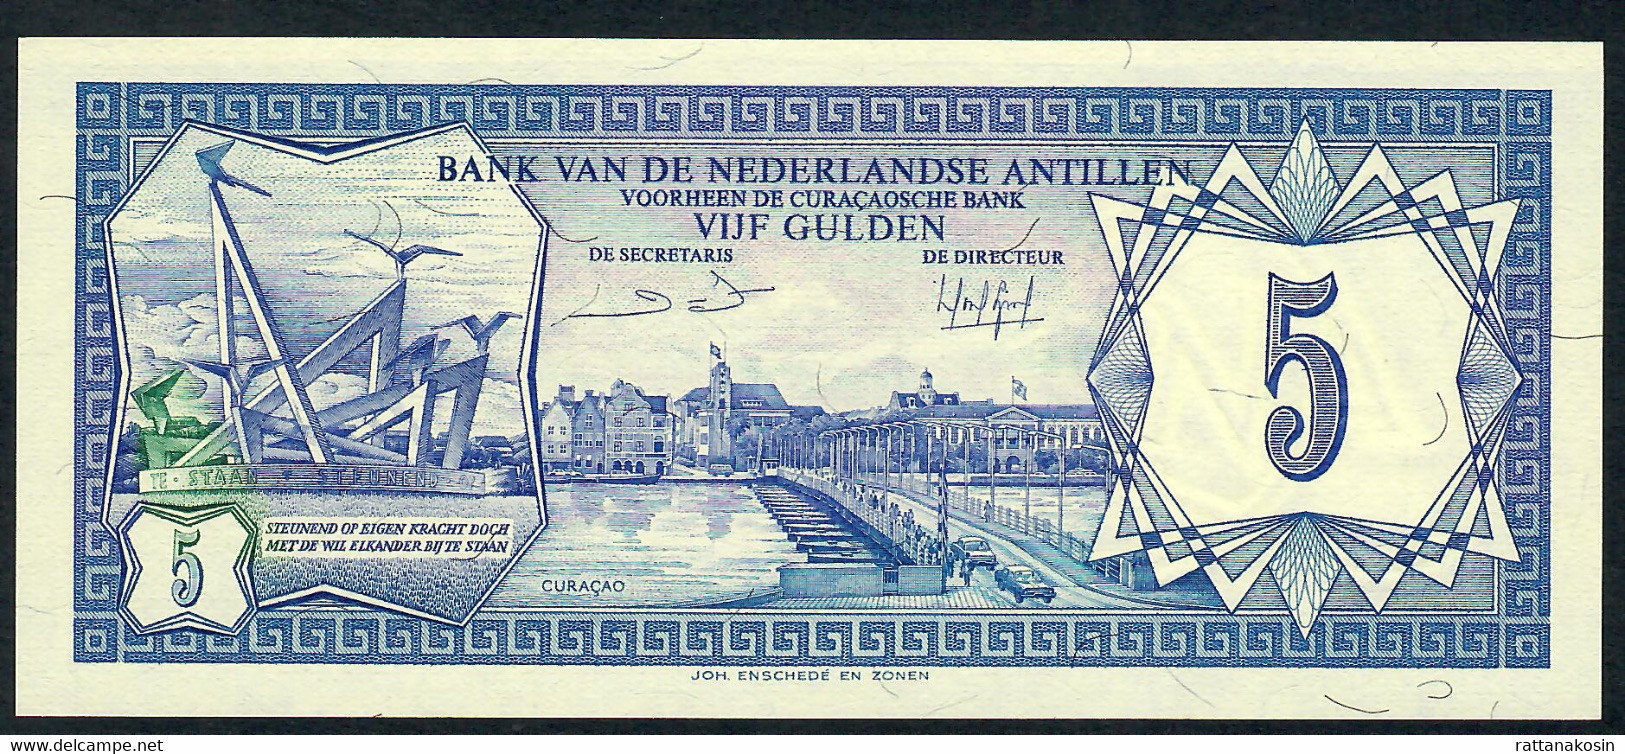 NETHERLANDS ANTILLES  P15b 5 GULDEN  1.6.1984 CURACAO Signature 7  UNC. - Other - America